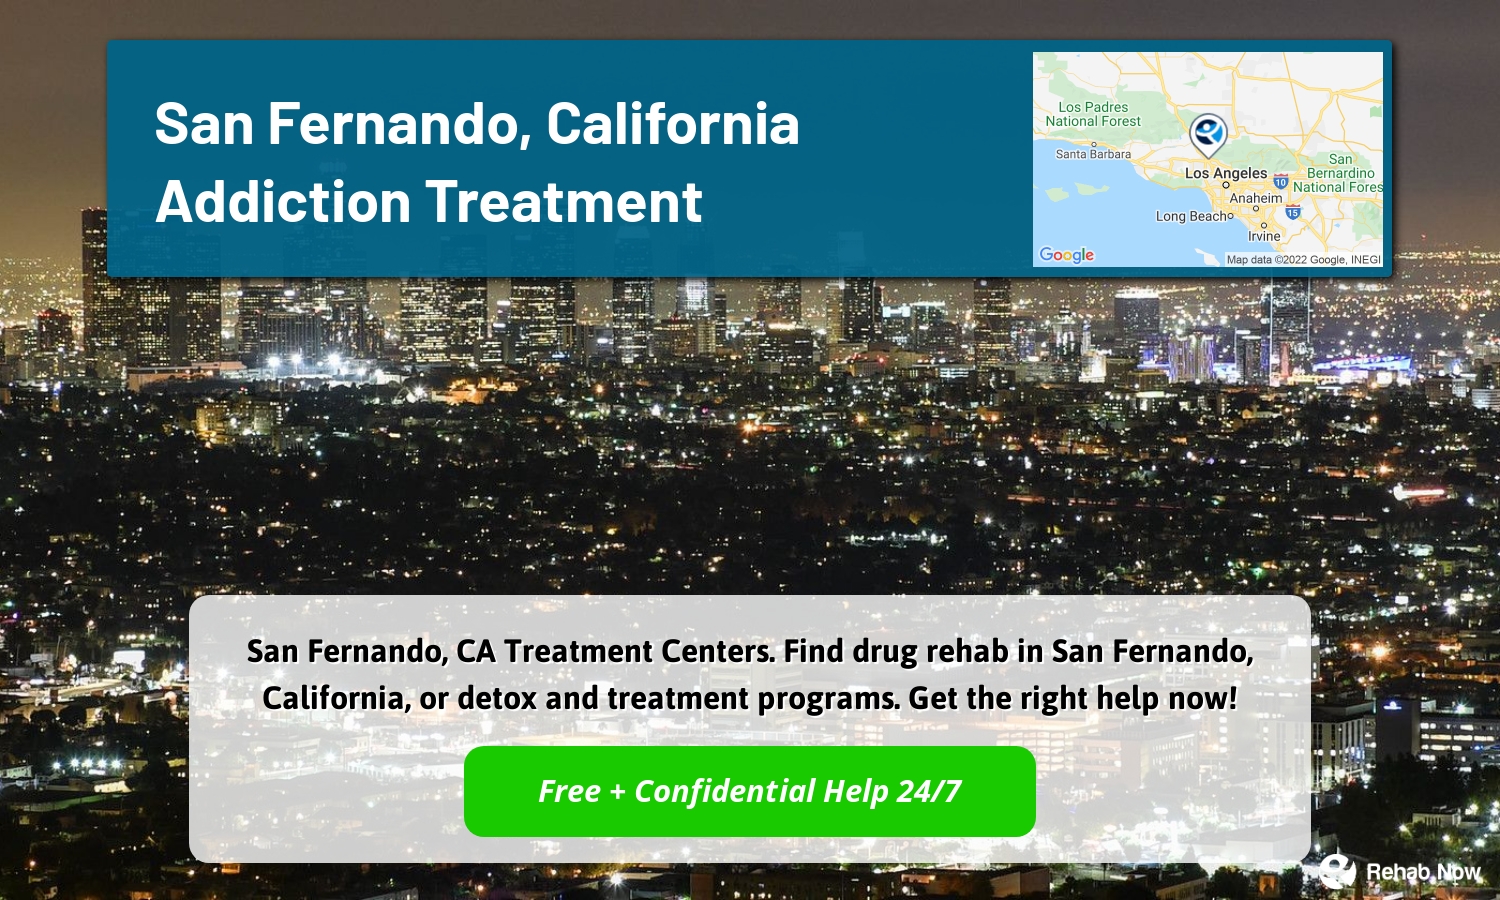 San Fernando, CA Treatment Centers. Find drug rehab in San Fernando, California, or detox and treatment programs. Get the right help now!